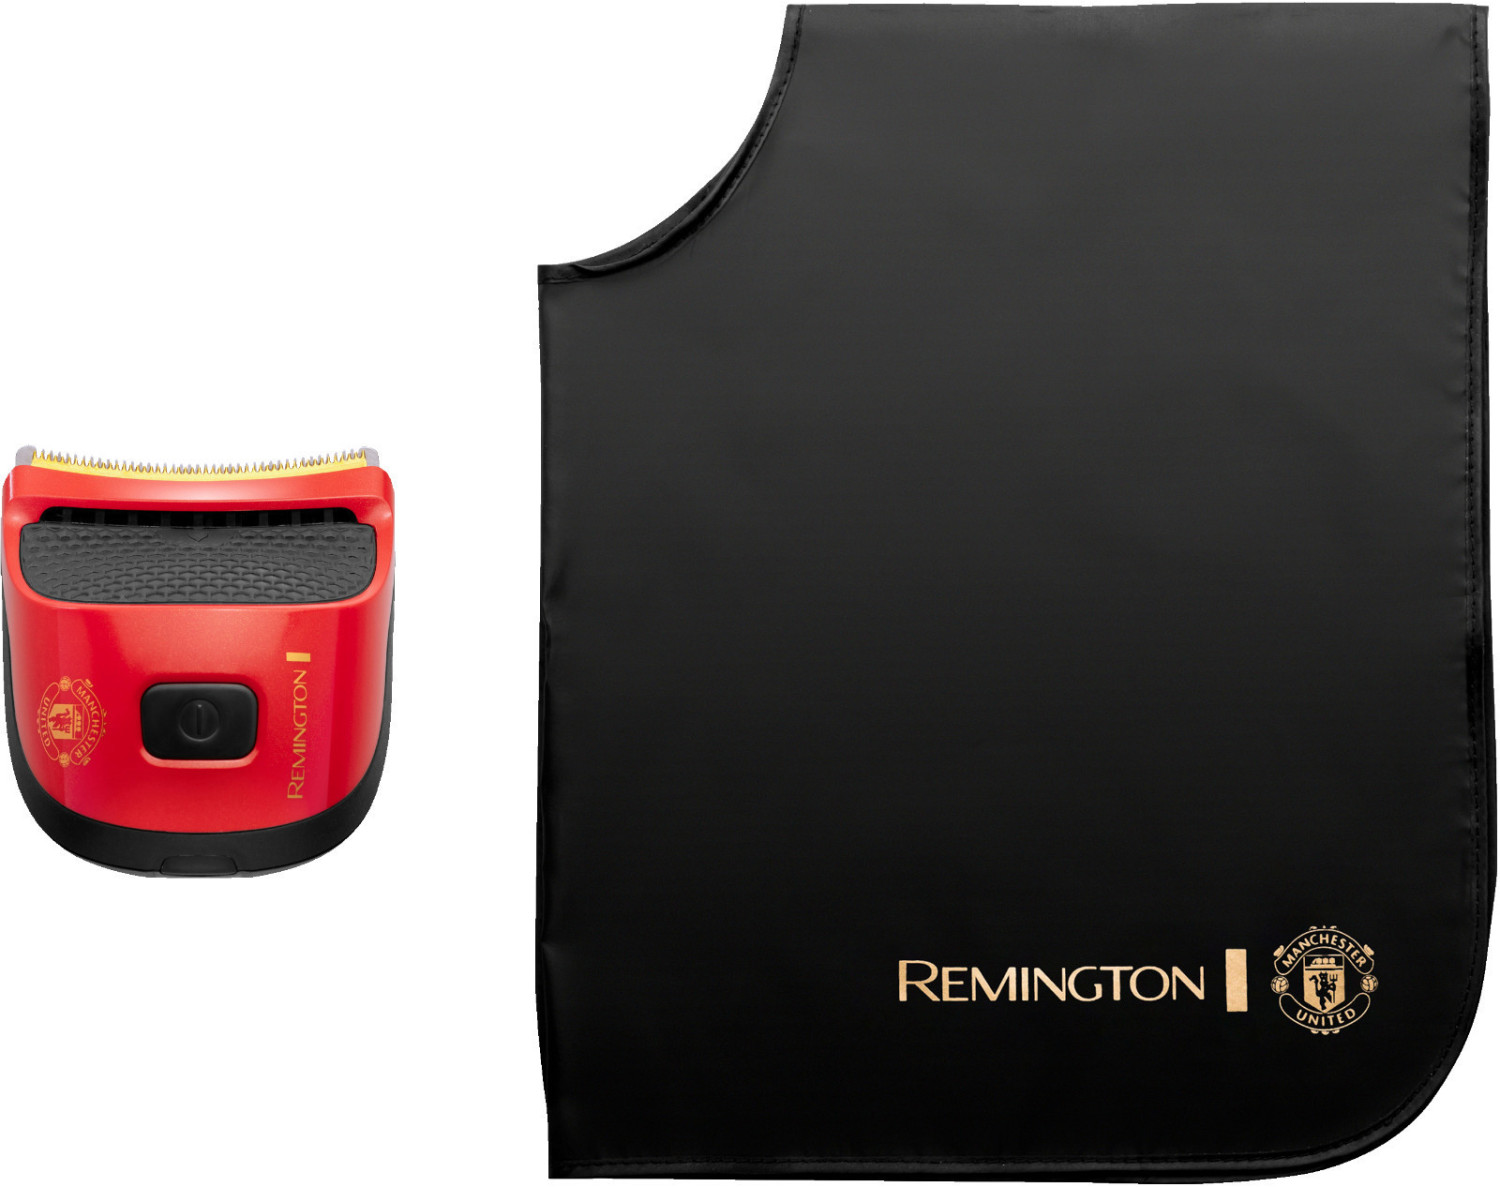 Remington HC4225 Colour ab | United Manchester Cut € Quick 66,99 bei Preisvergleich